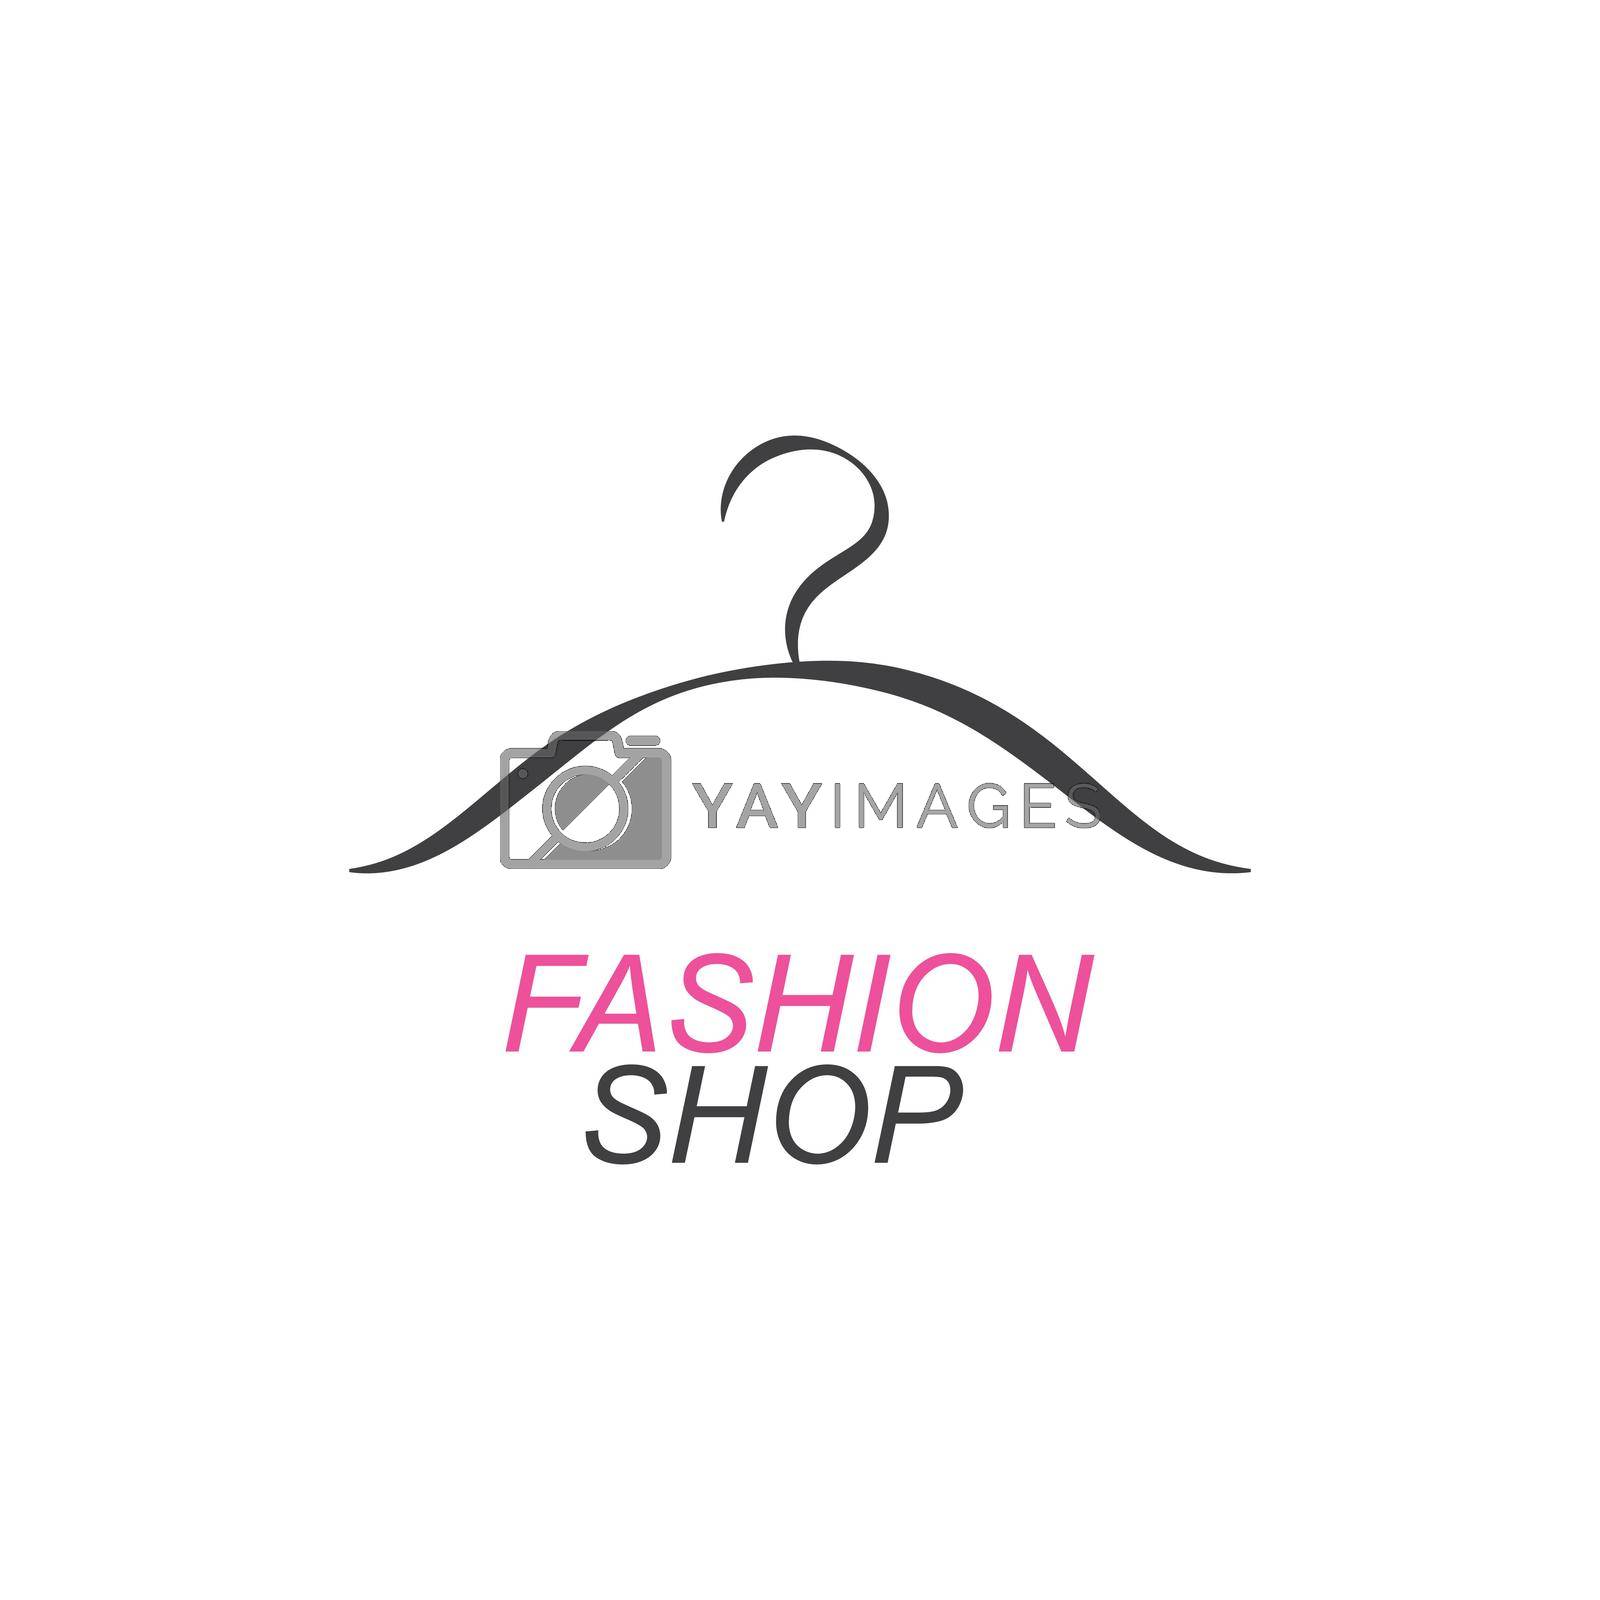 Fashion dress illustration logo design